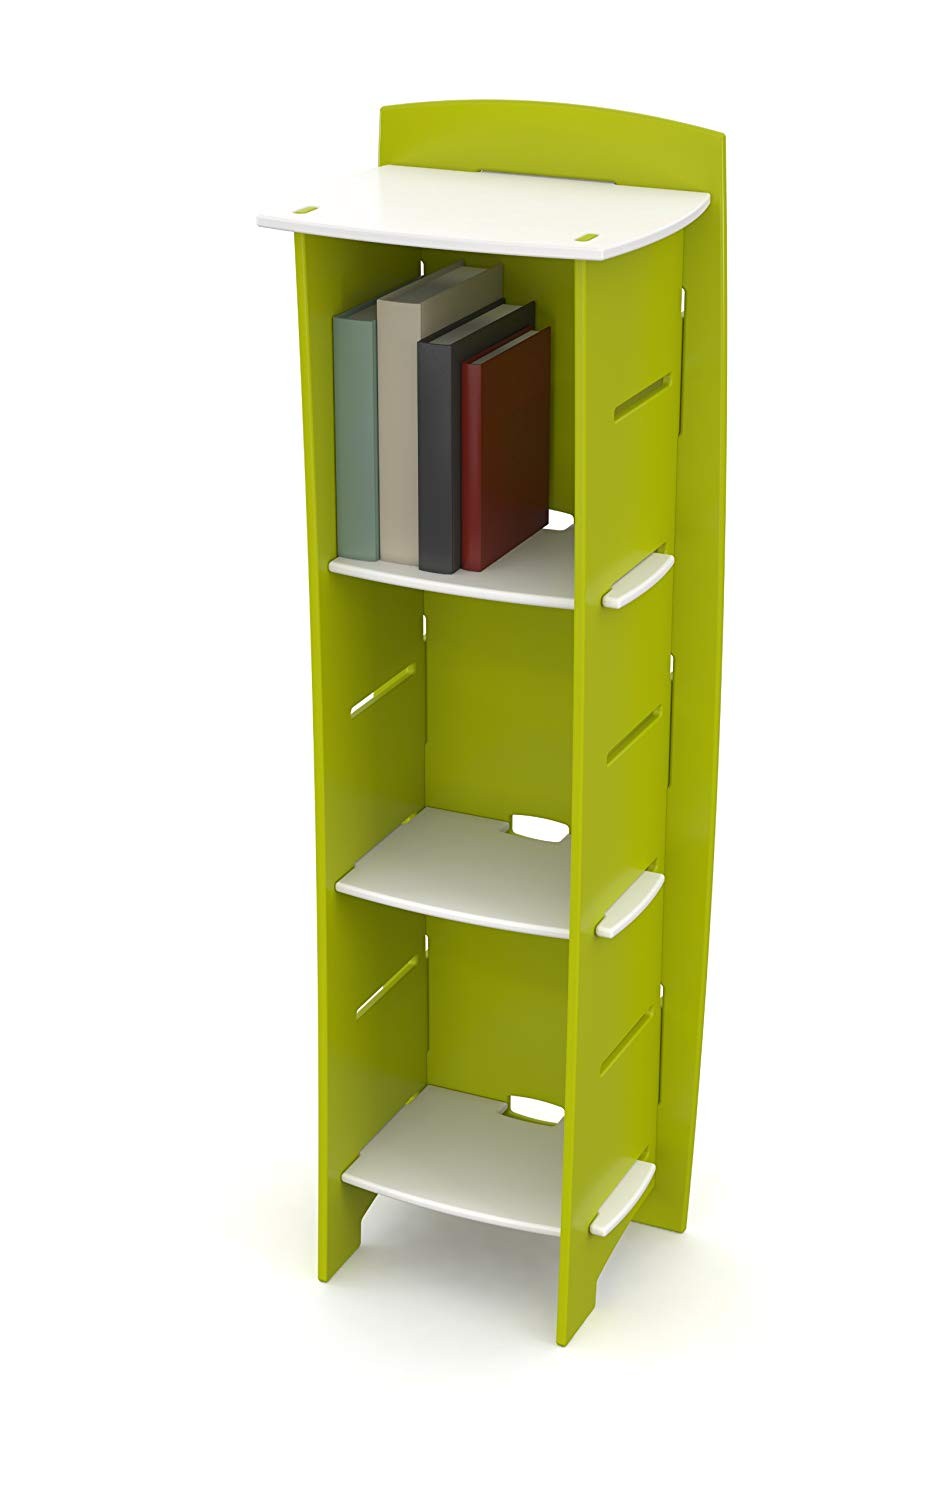 Furniture Children's Furniture 3-Shelf Bookcase, Storage Organizer with Adjustable Shelves for Kids